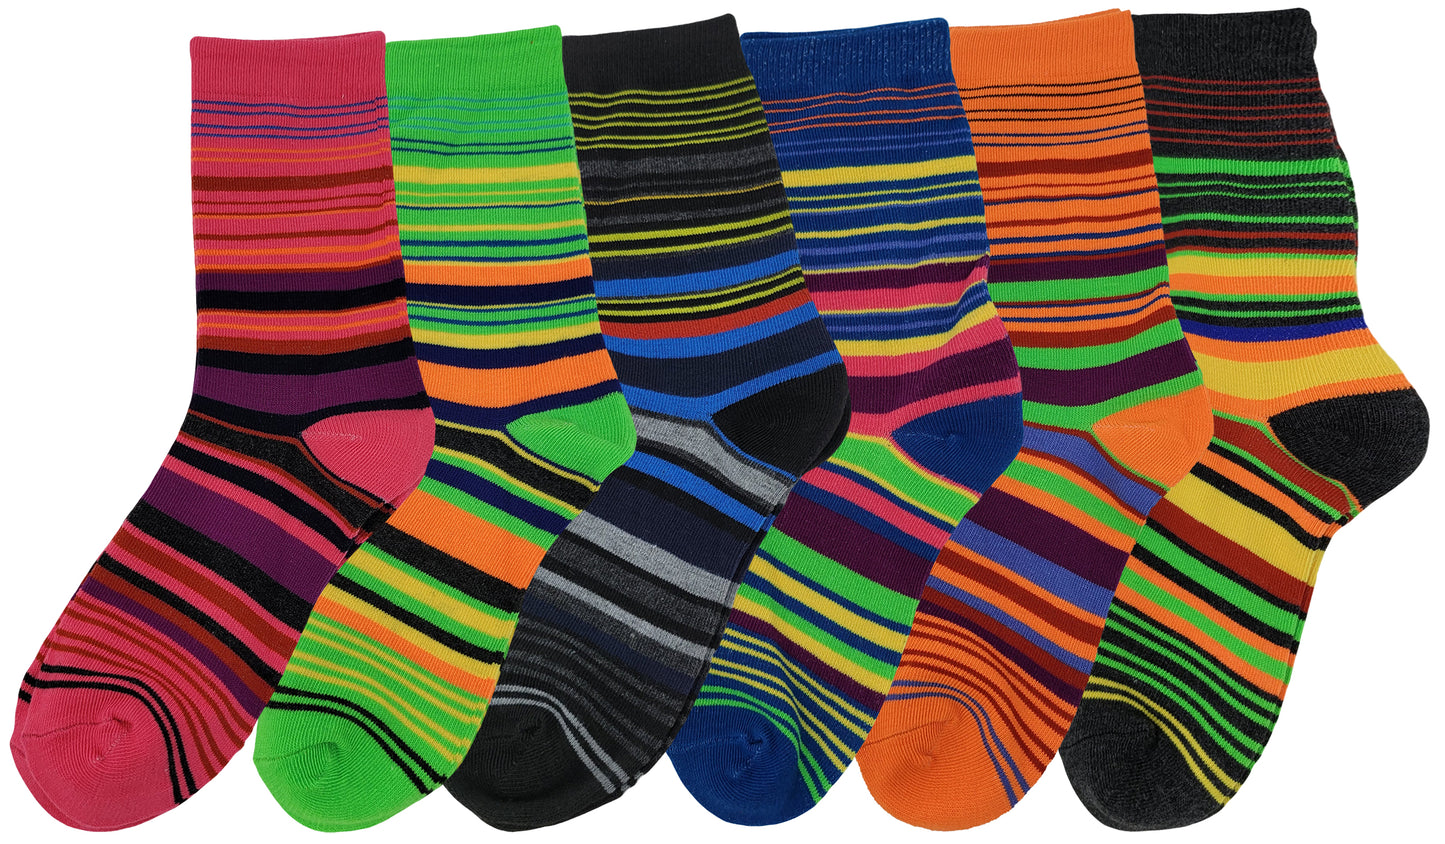 Sumona 6 Pairs Women Colorful Stripes Design Novelty Crew Socks